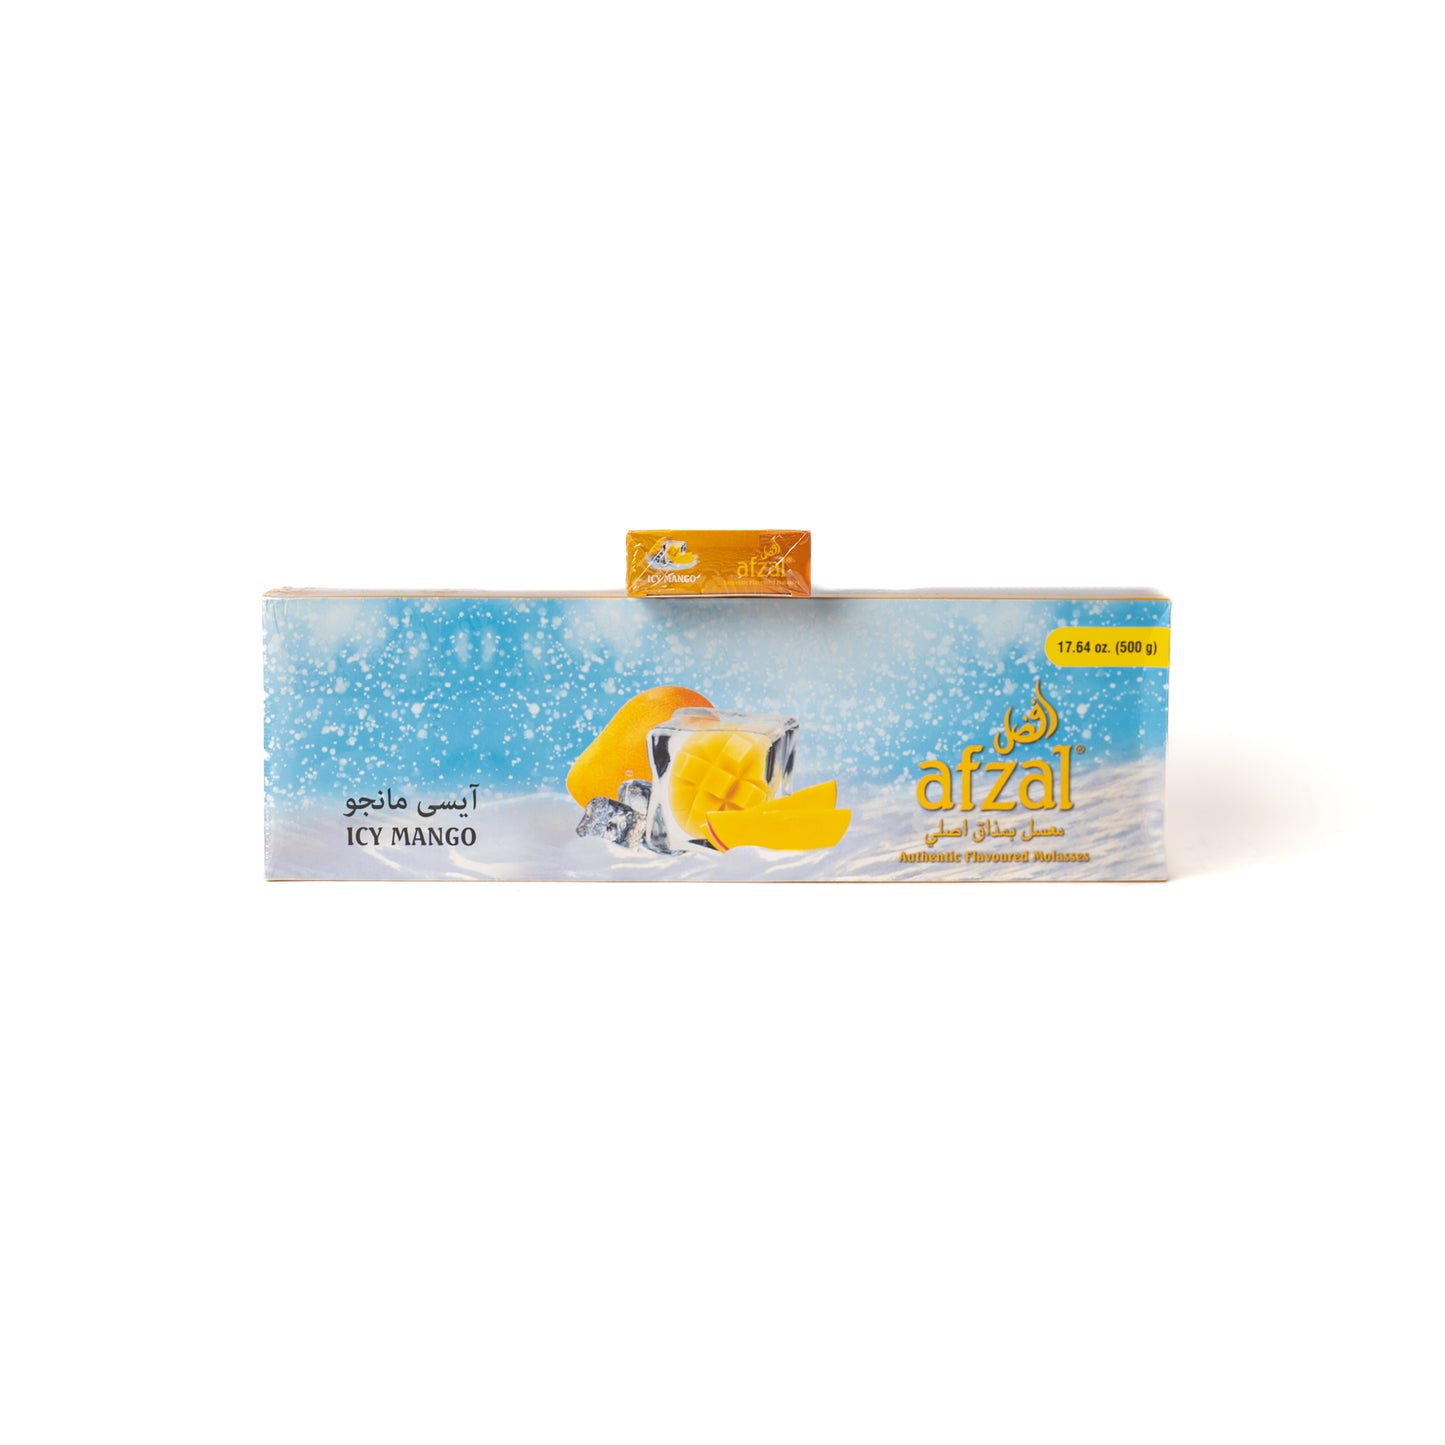 Afzal Icy Mango Hookah Flavor - 50g